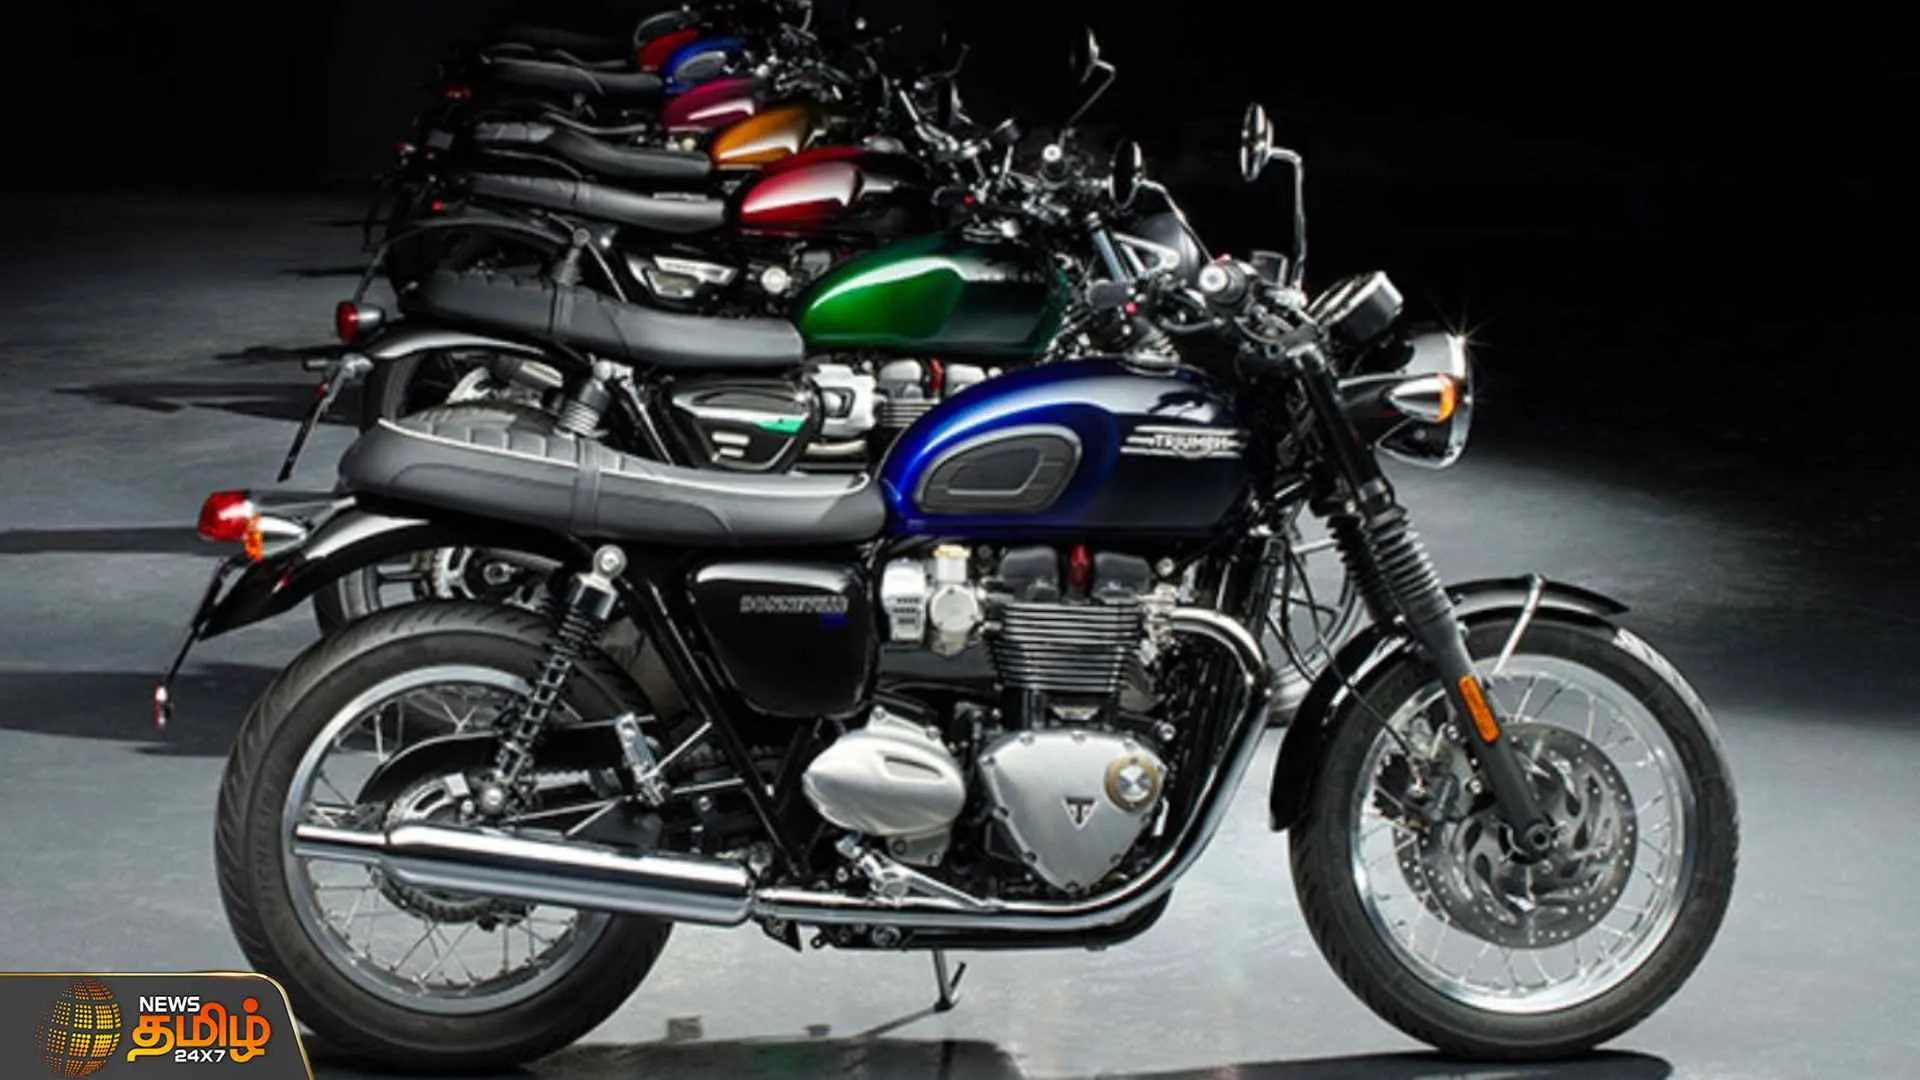 Triumph Motorcycles-ன் புதிய எடிஷன் பைக்குகள் அறிமுகம்  புதிய எடிஷன் பைக்குகள் ரூ.9.09 லட்சம் முதல் விற்பனை